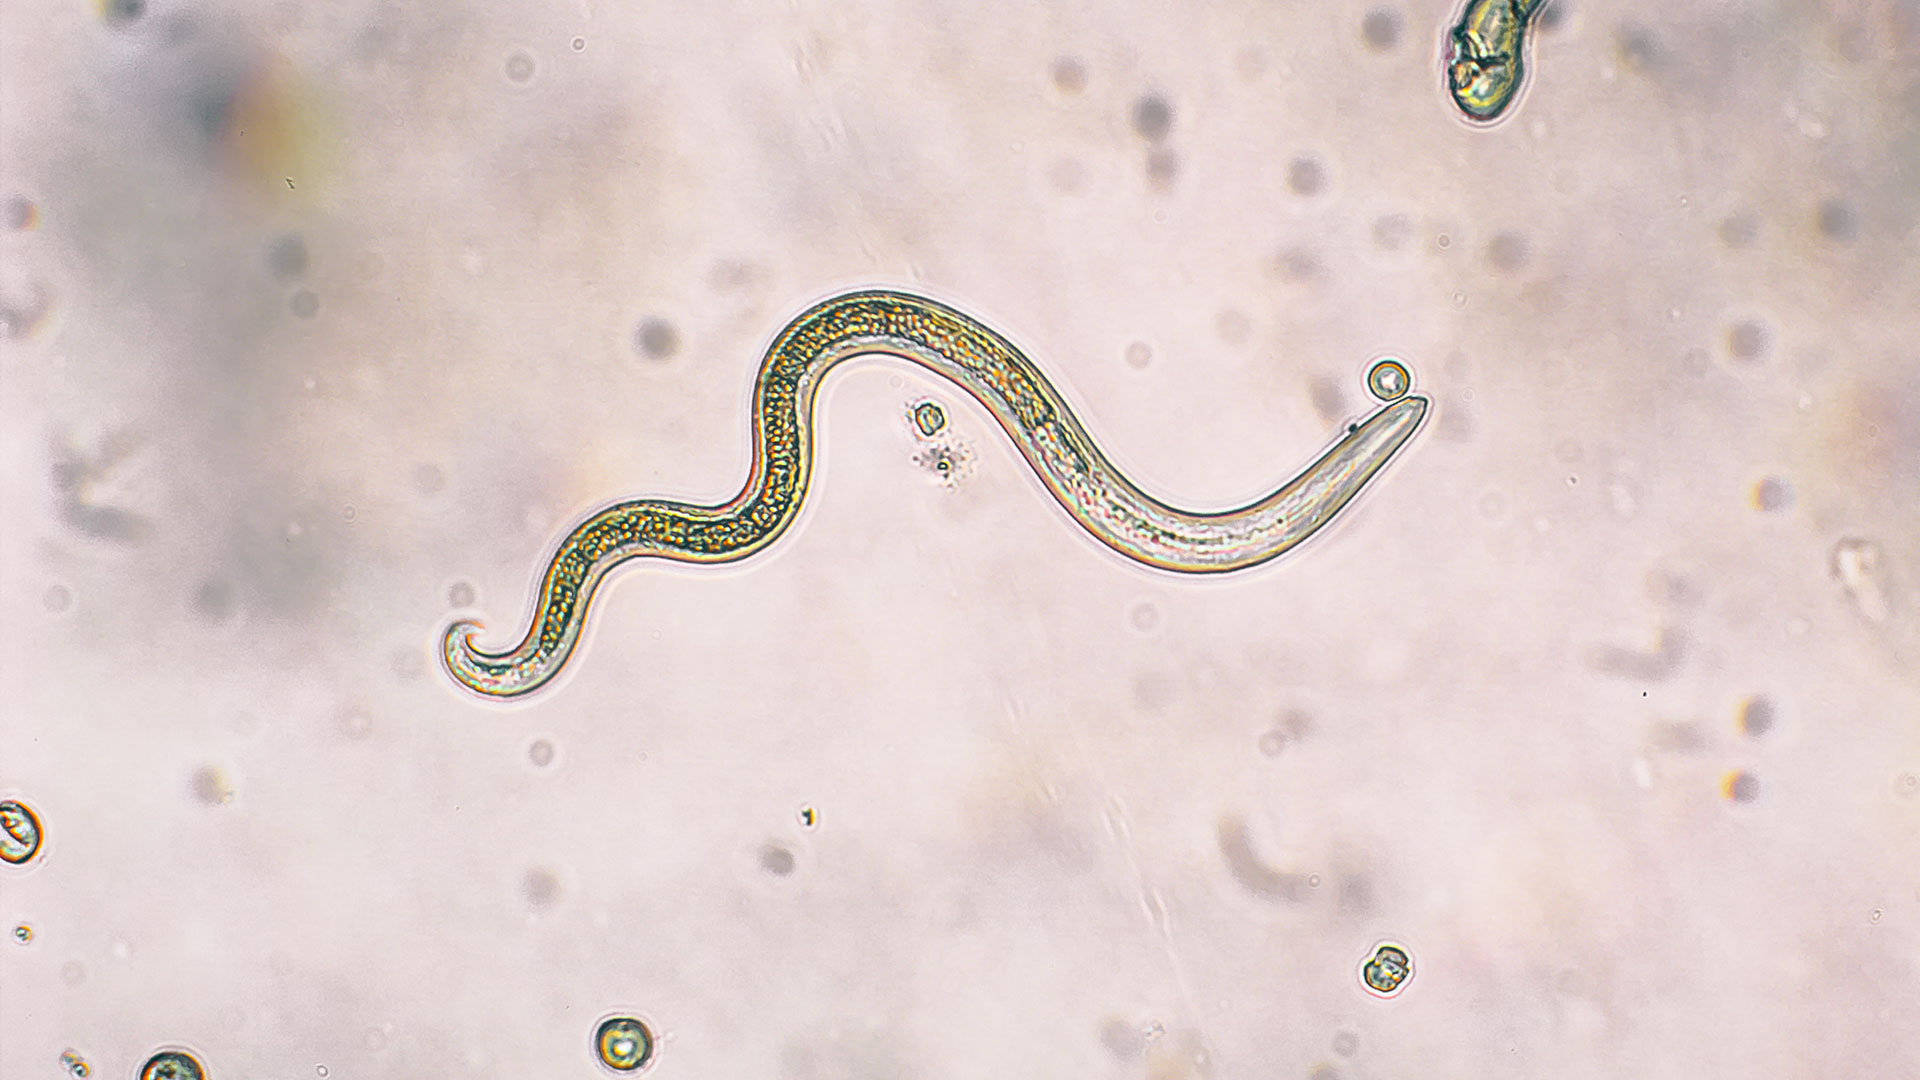 Parasitic worm under microscope